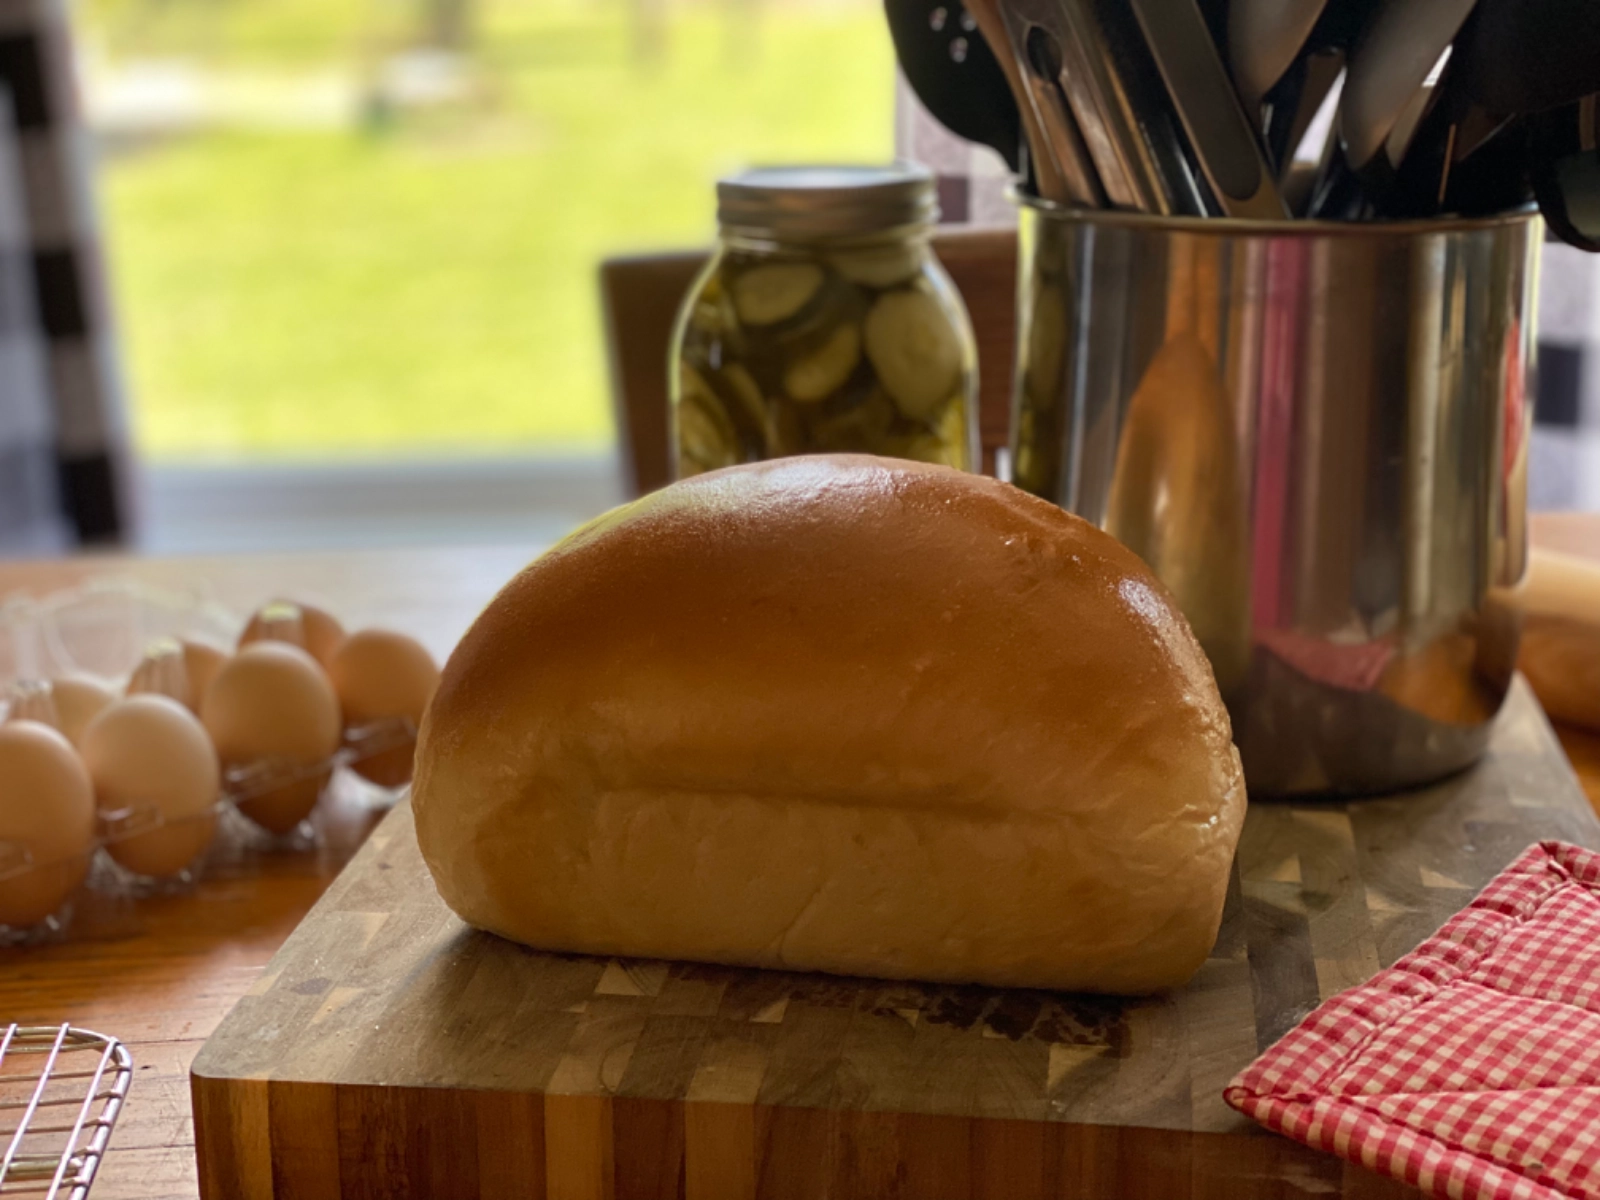 white-yeast-bread-8-x-4